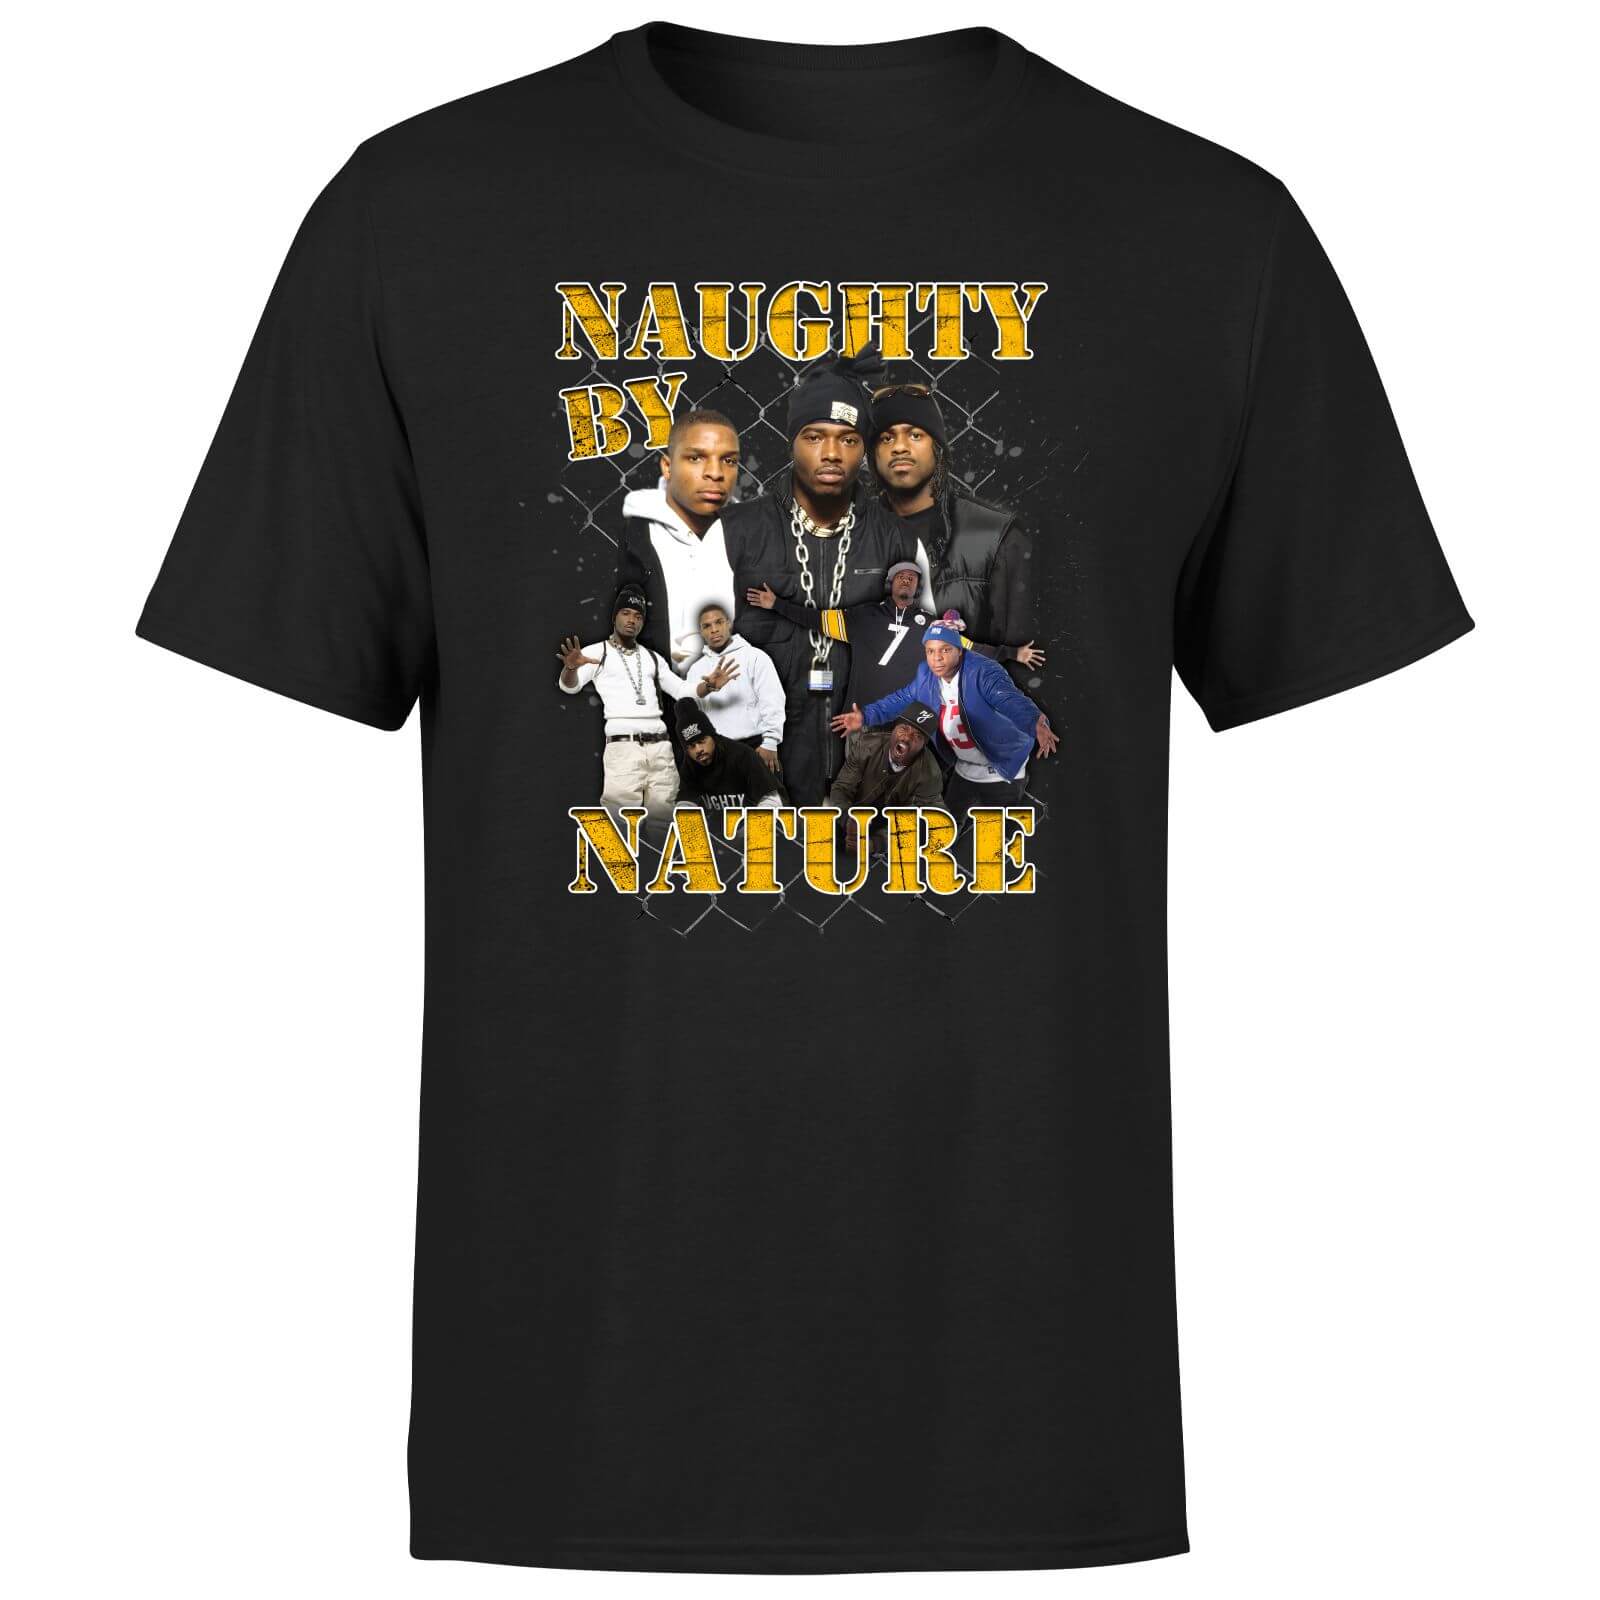 Naughty By Nature Men's T-Shirt - Black - M